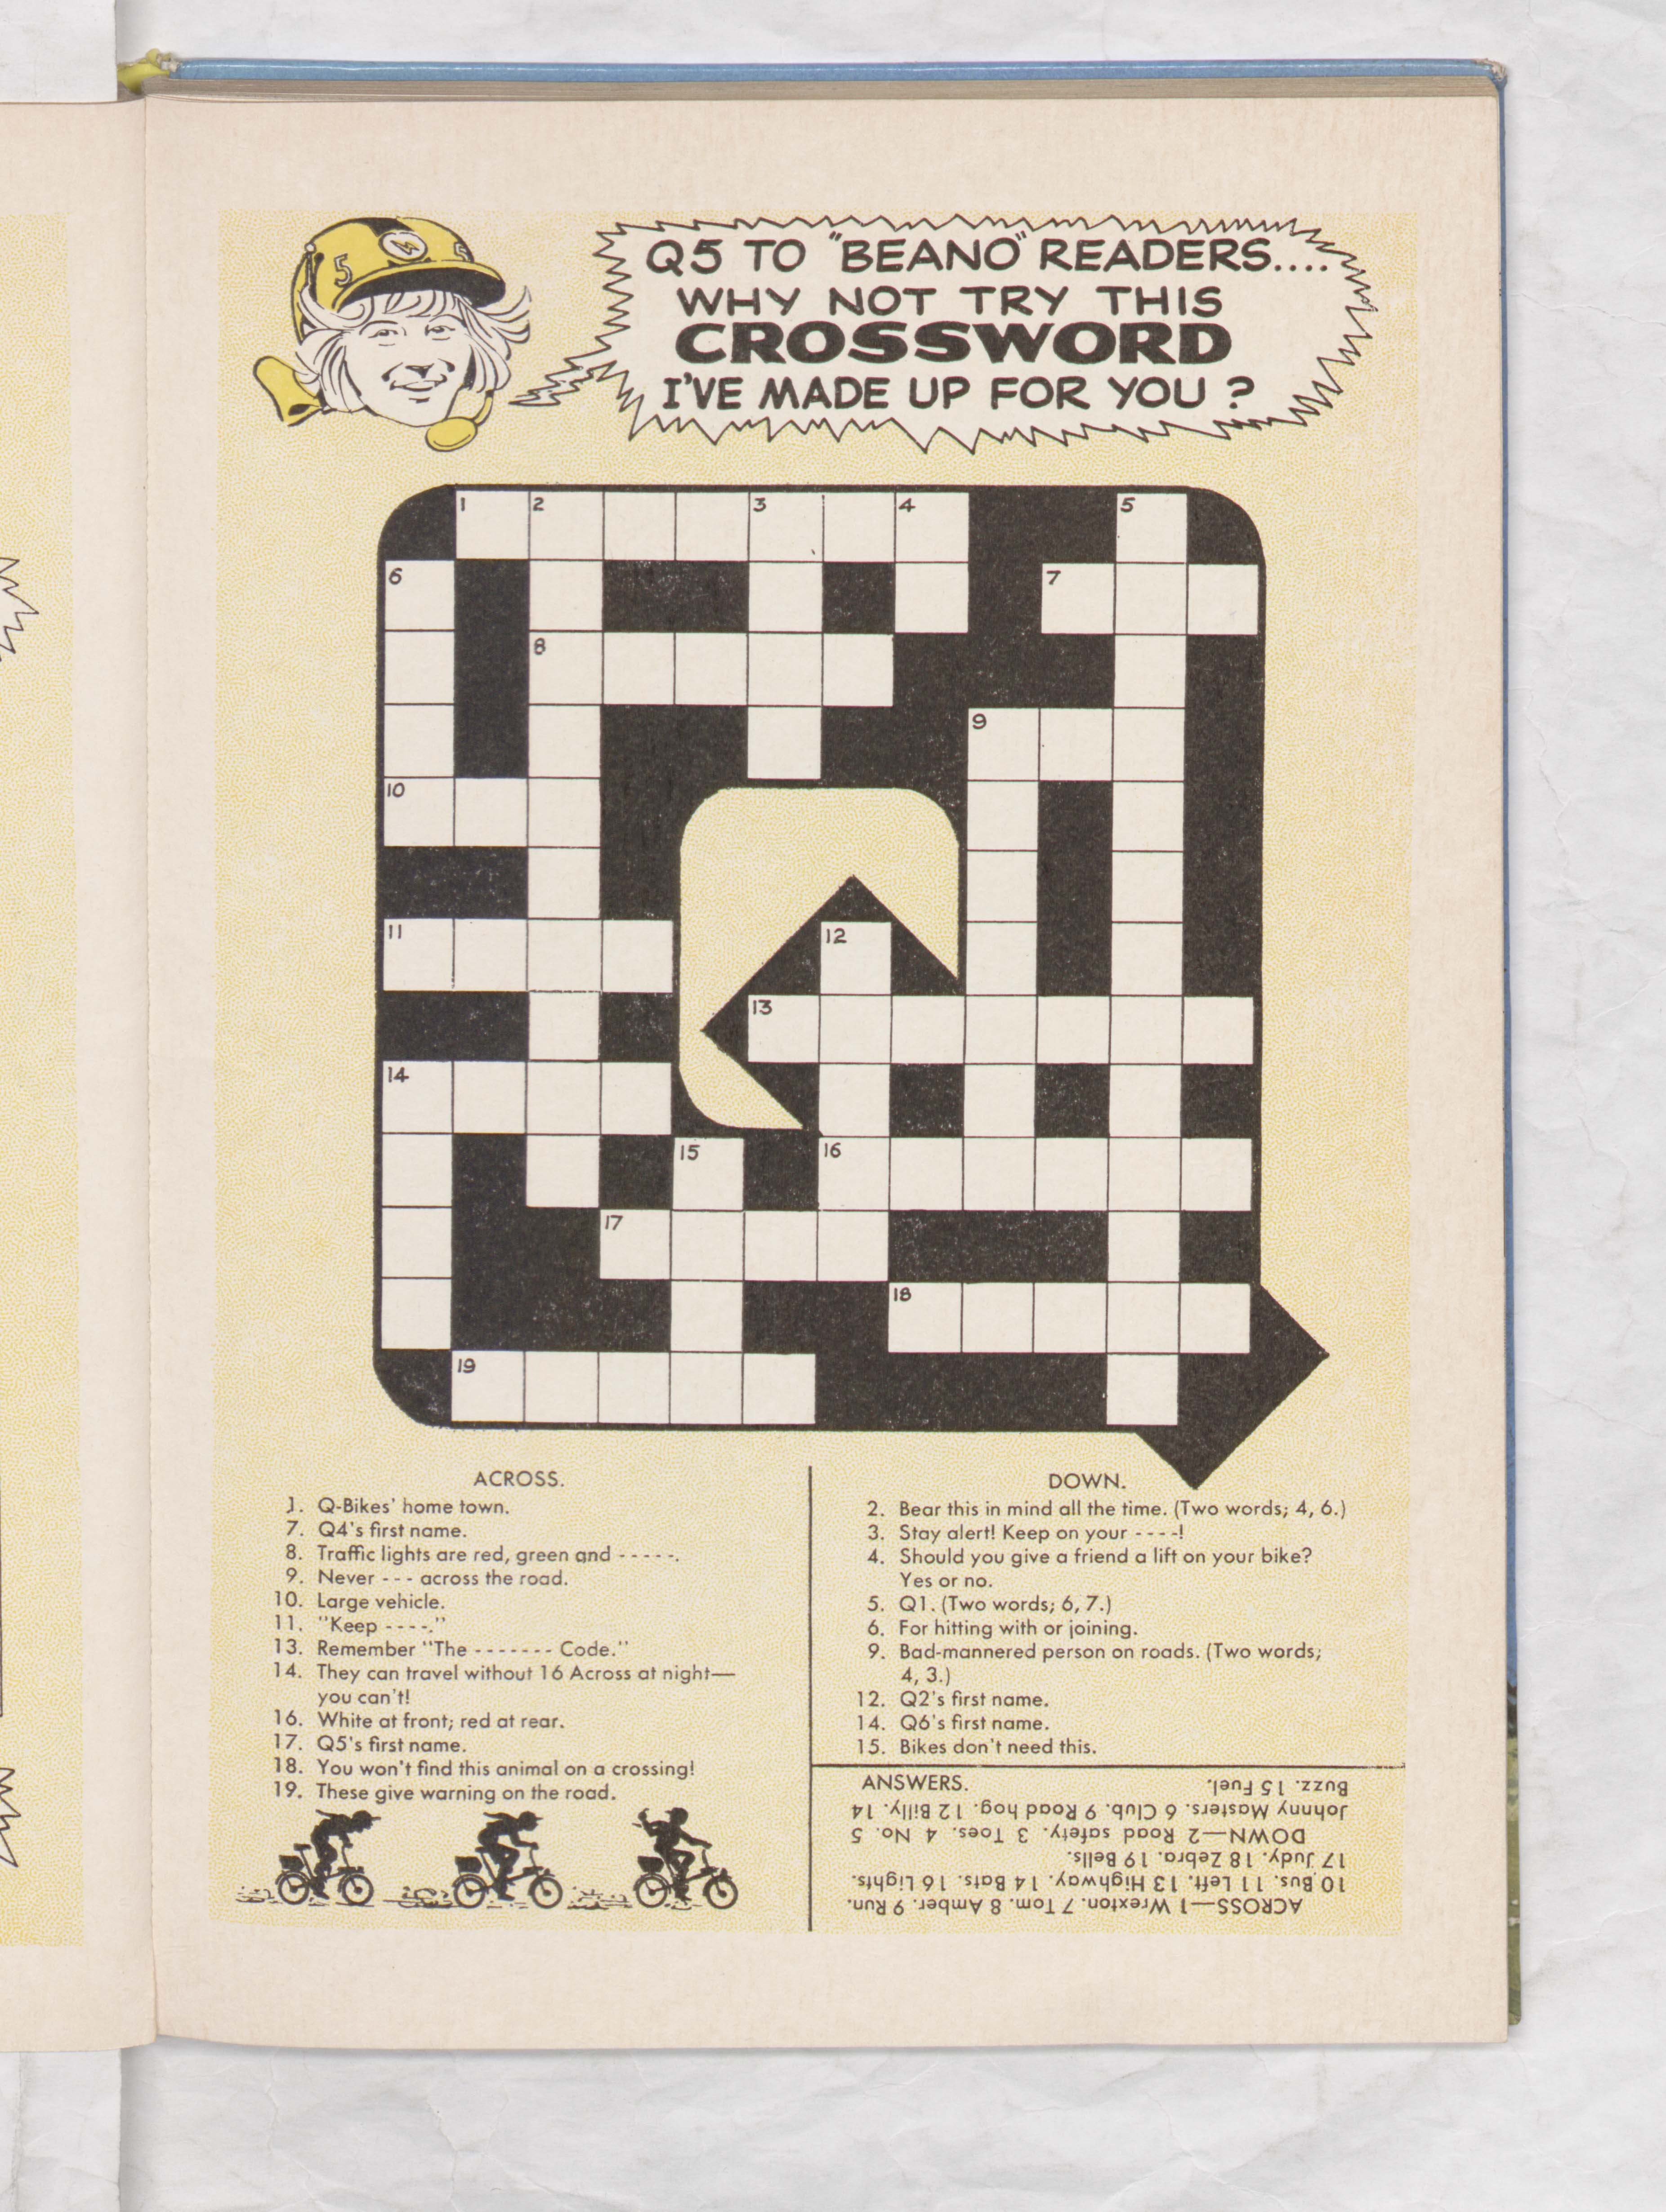 Beano Book 1970 - Q-Bikes - Page 15 crossword